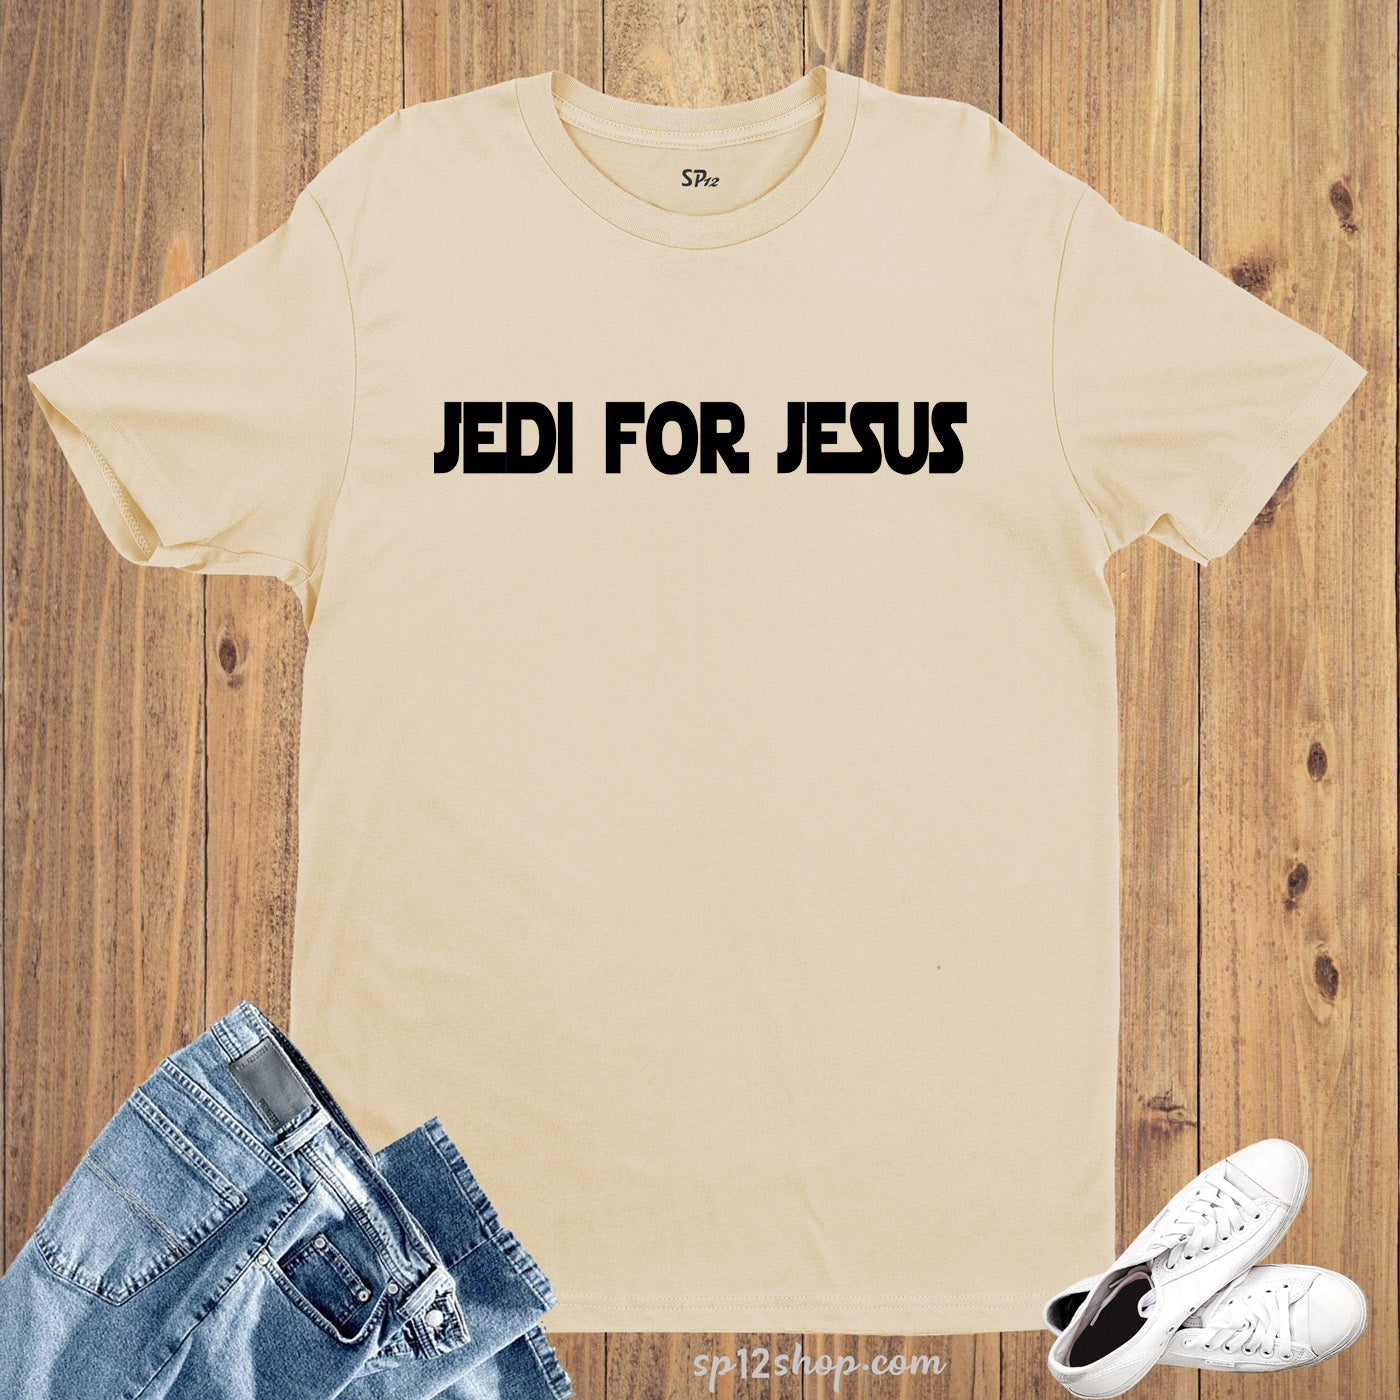 Christian faith T Shirts Jedi For Jesus